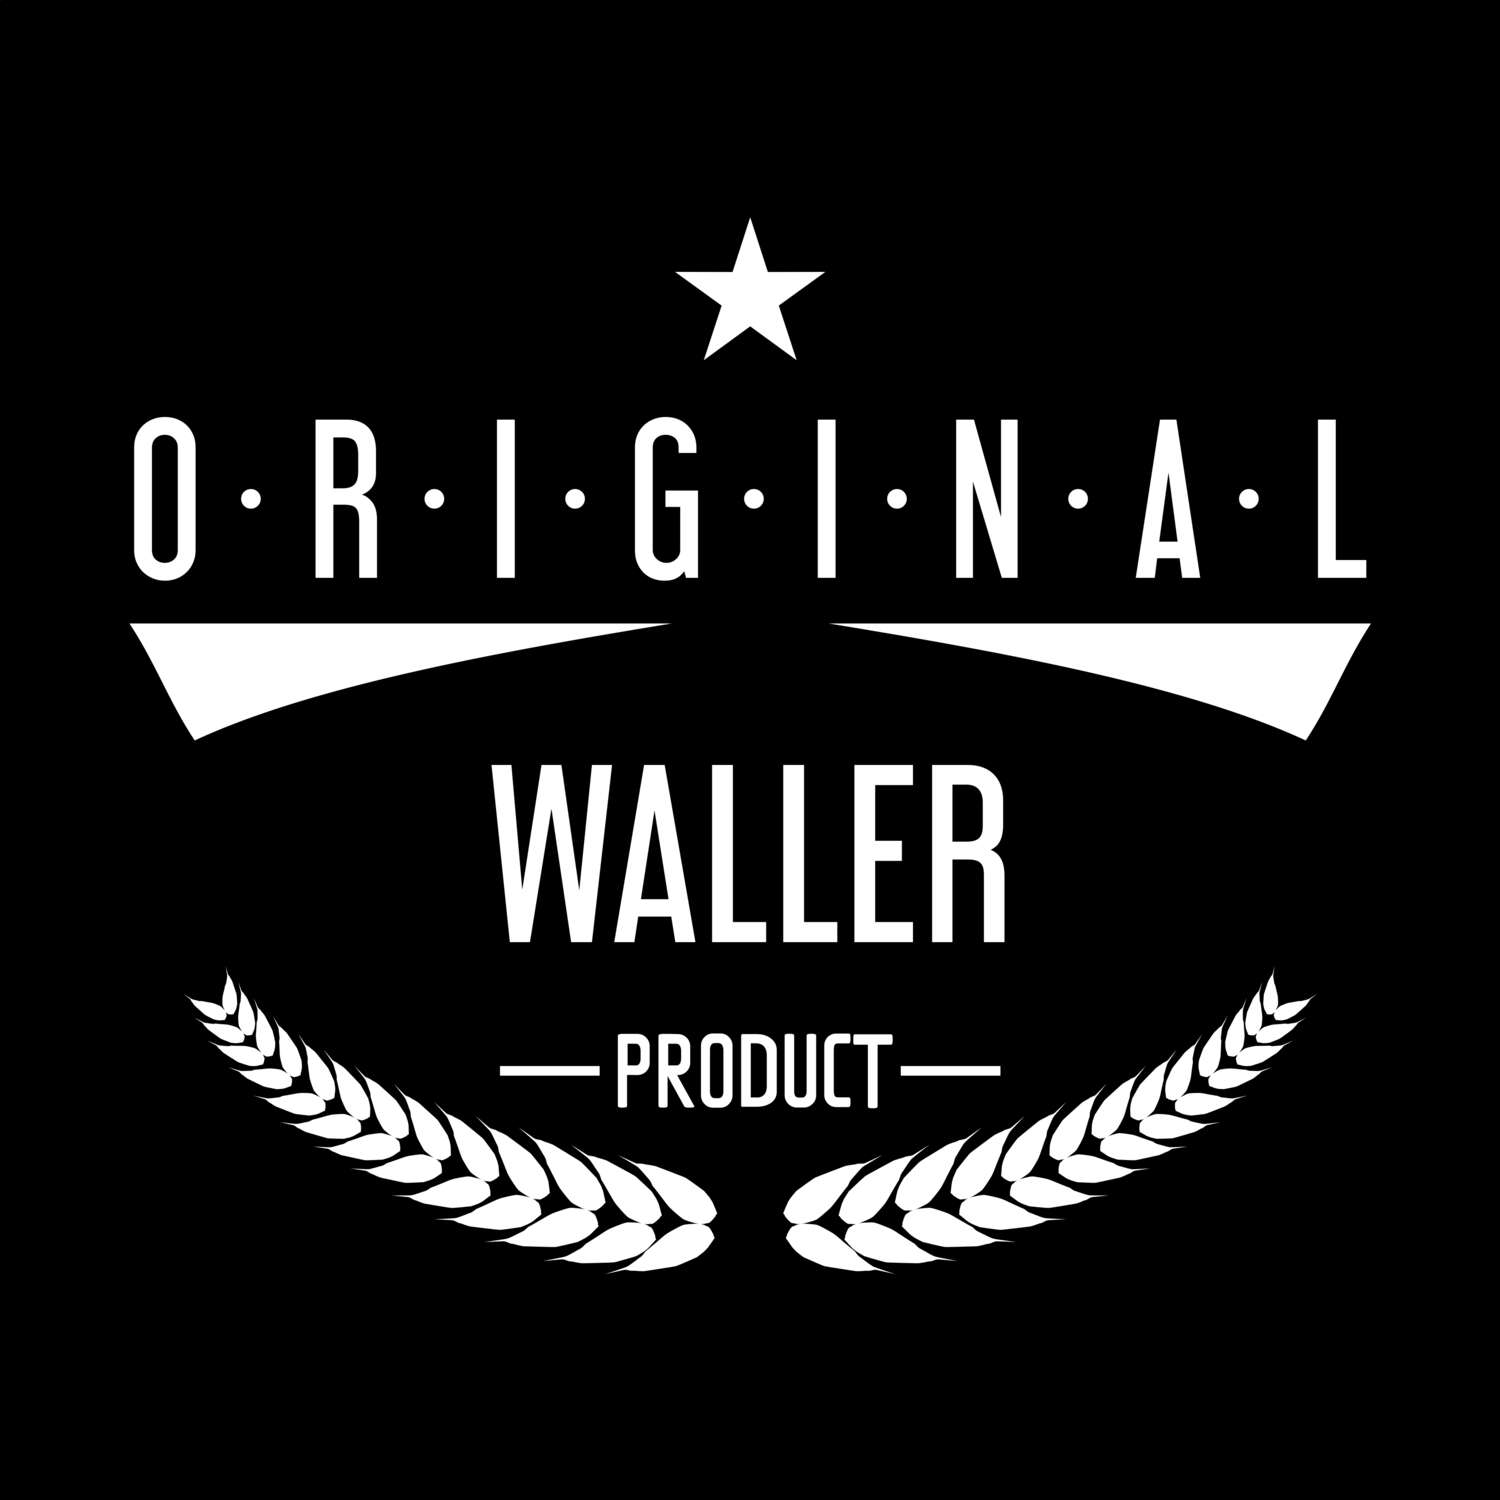 Waller T-Shirt »Original Product«